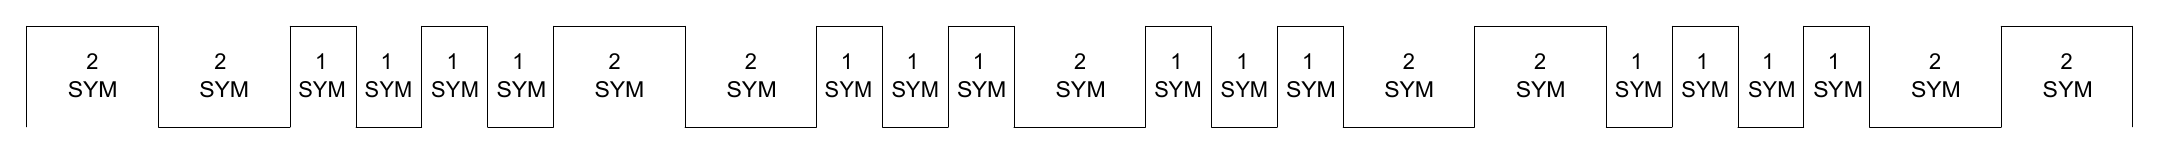 Sync signal description